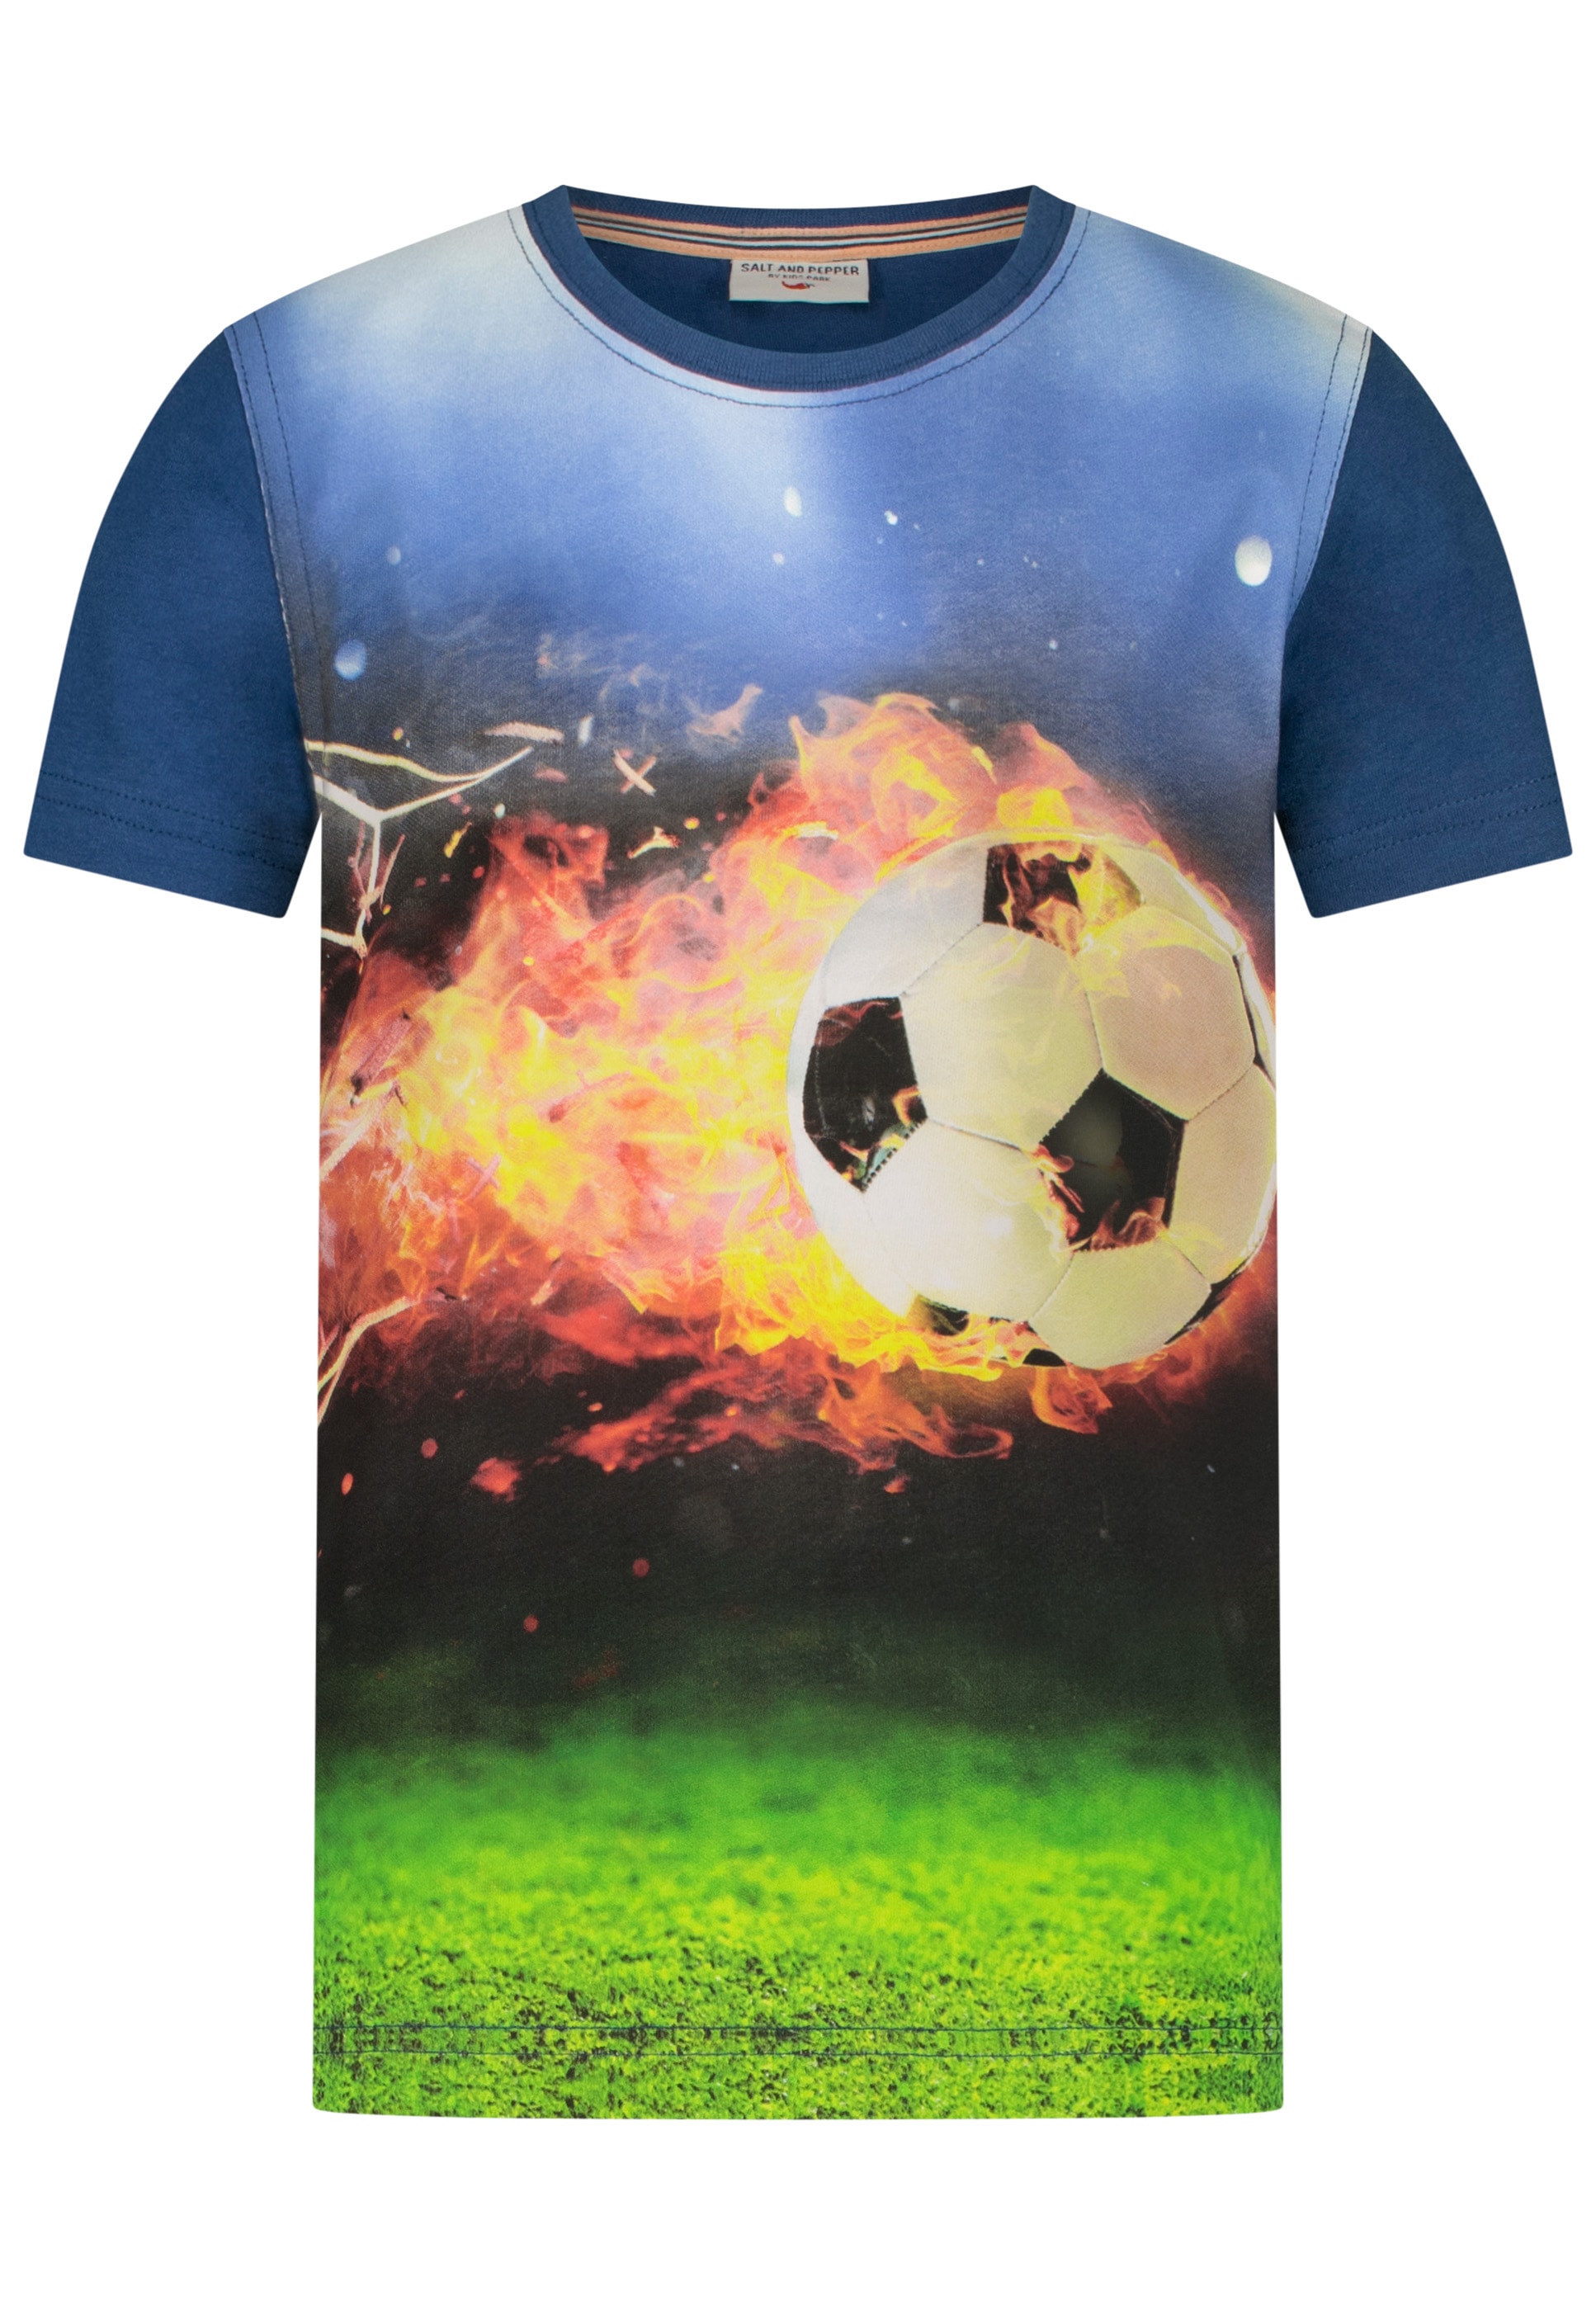 AND mit (2 T-Shirt tlg.), SALT Fußballmotiv »Torjäger«, BAUR tollem kaufen PEPPER |